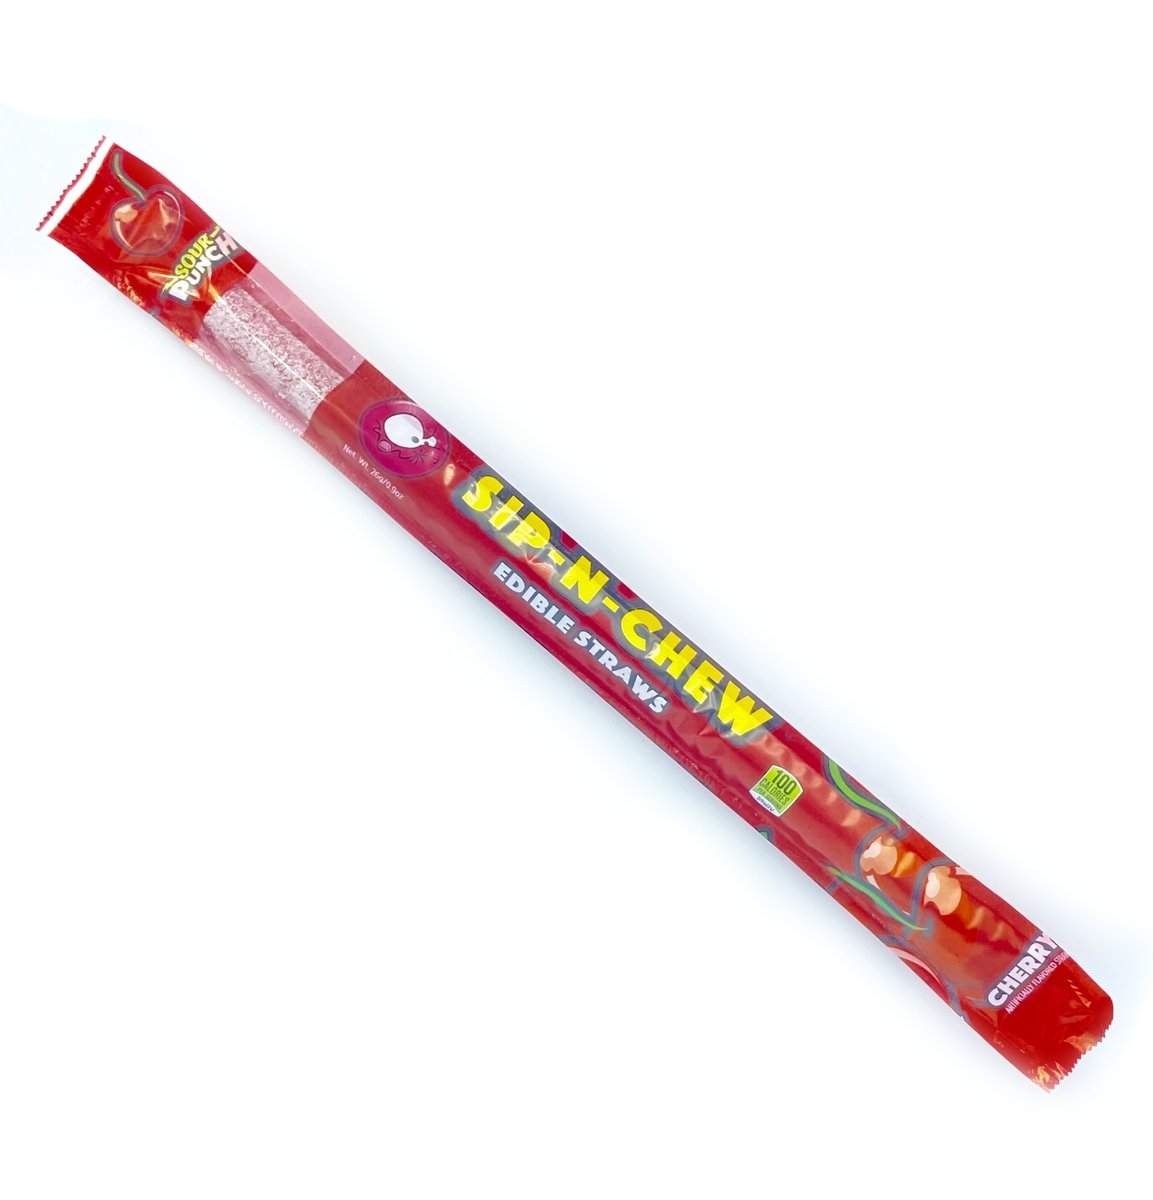 Sour Punch Sip-N-Chew Edible Straws - Cherry 26g